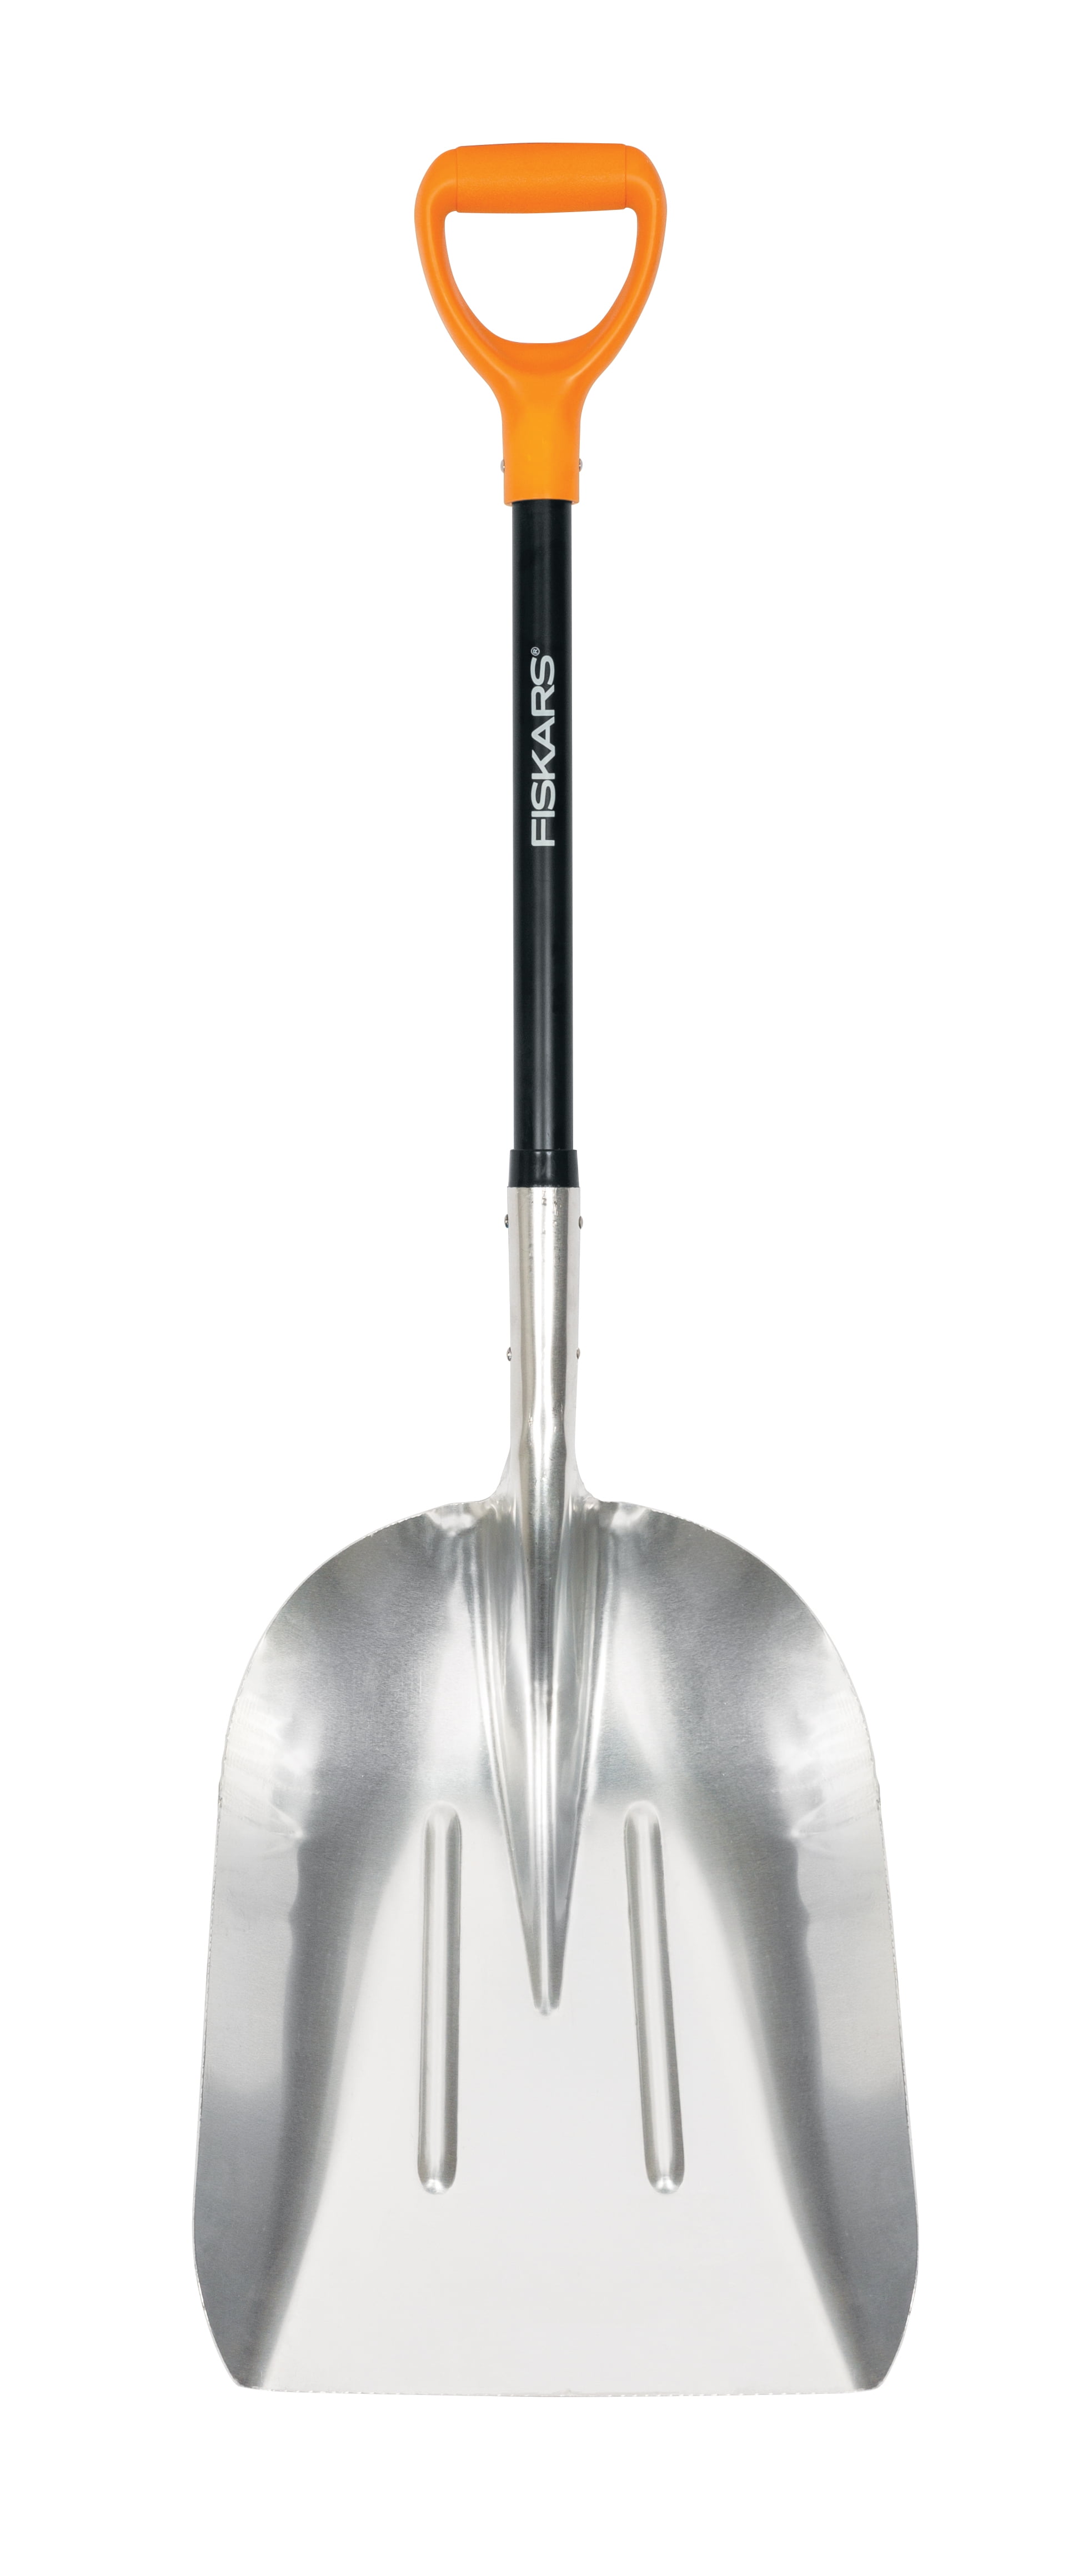 Fiskars D-Handle Scoop Shovel, Large Aluminum Head Garden Shovel